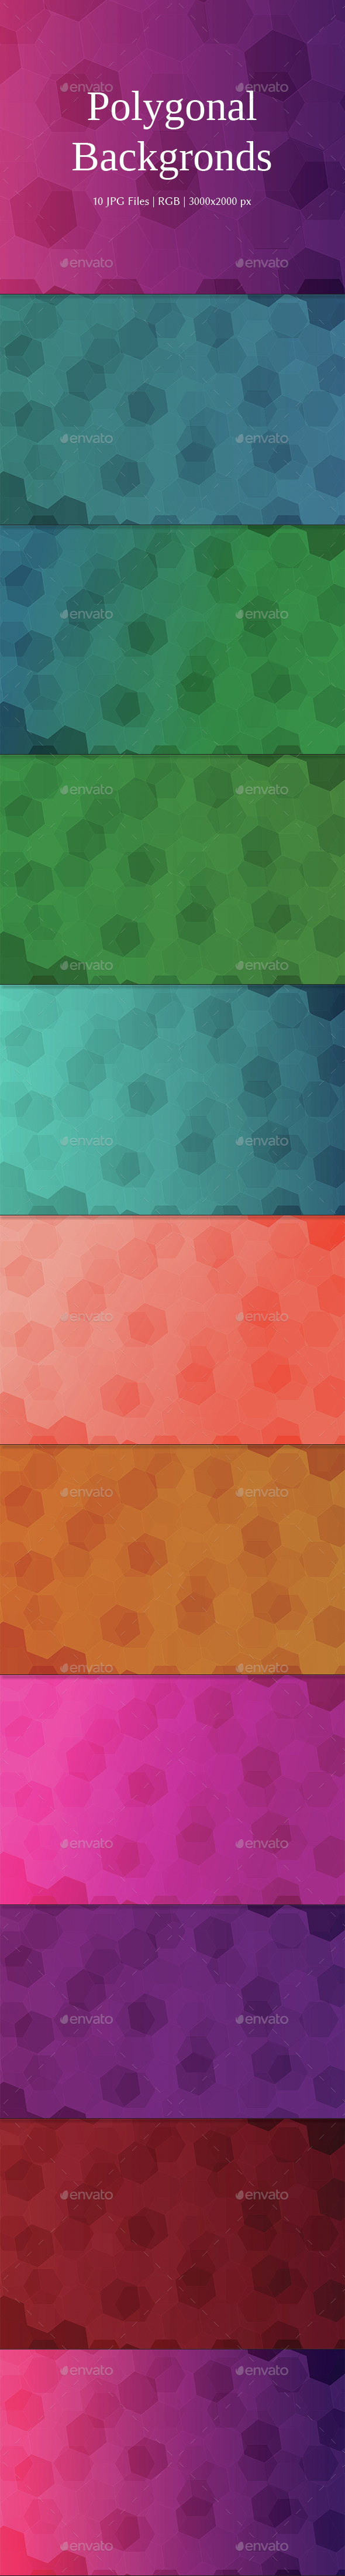 10 Minimalist Polygon Backgrounds